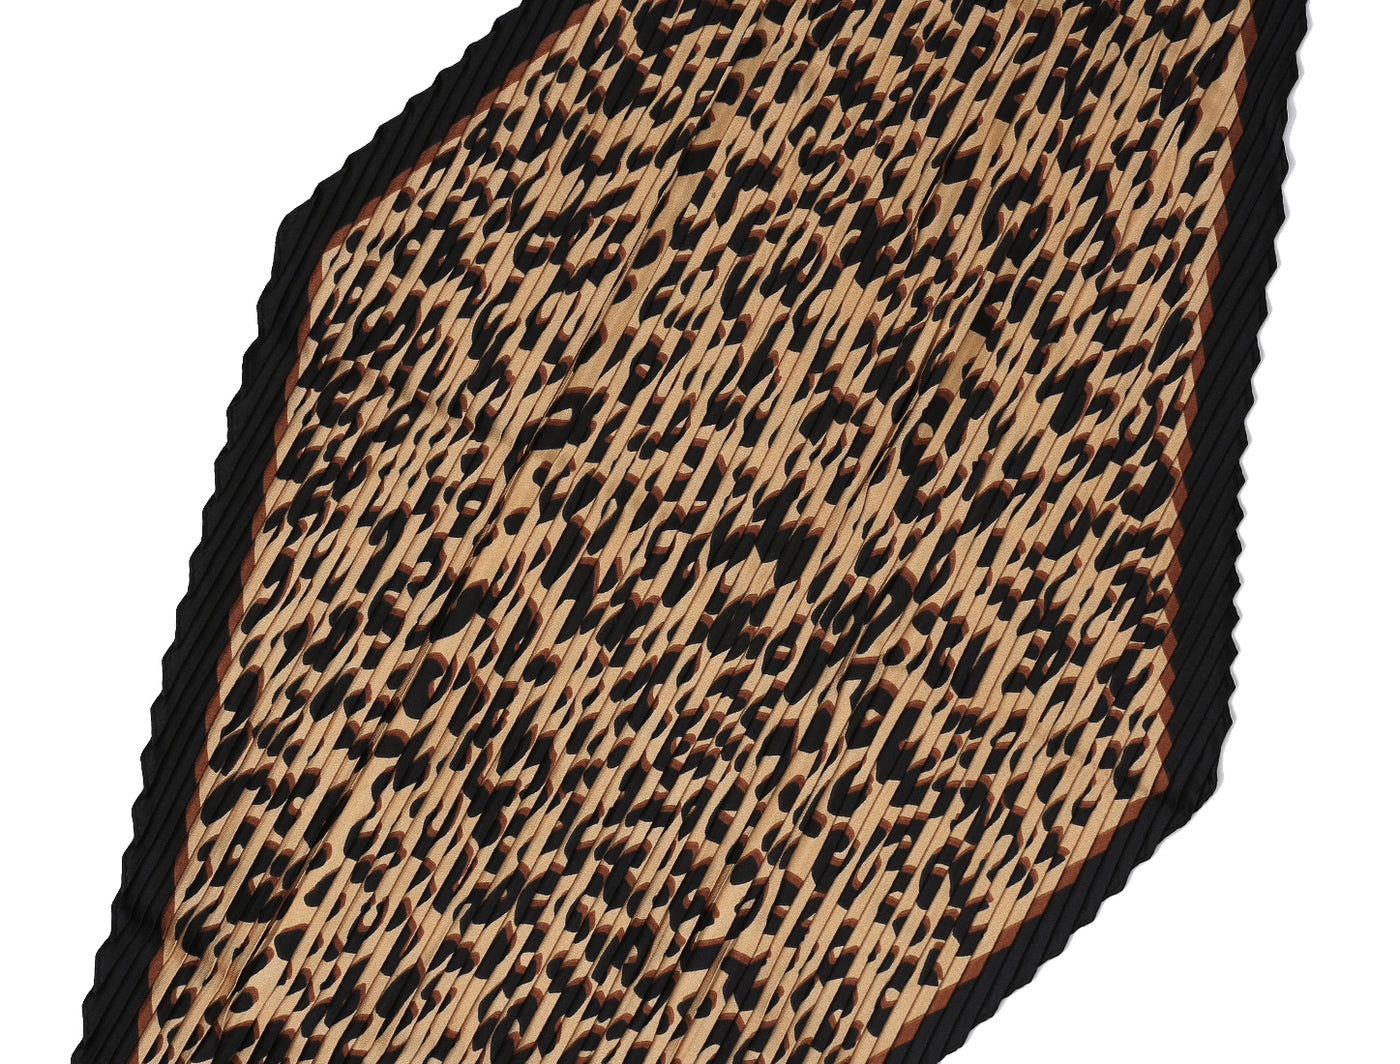 Allegra K Leopard Print Pleated Rhombus Scarf Neck Scarves Neckerchief Lady